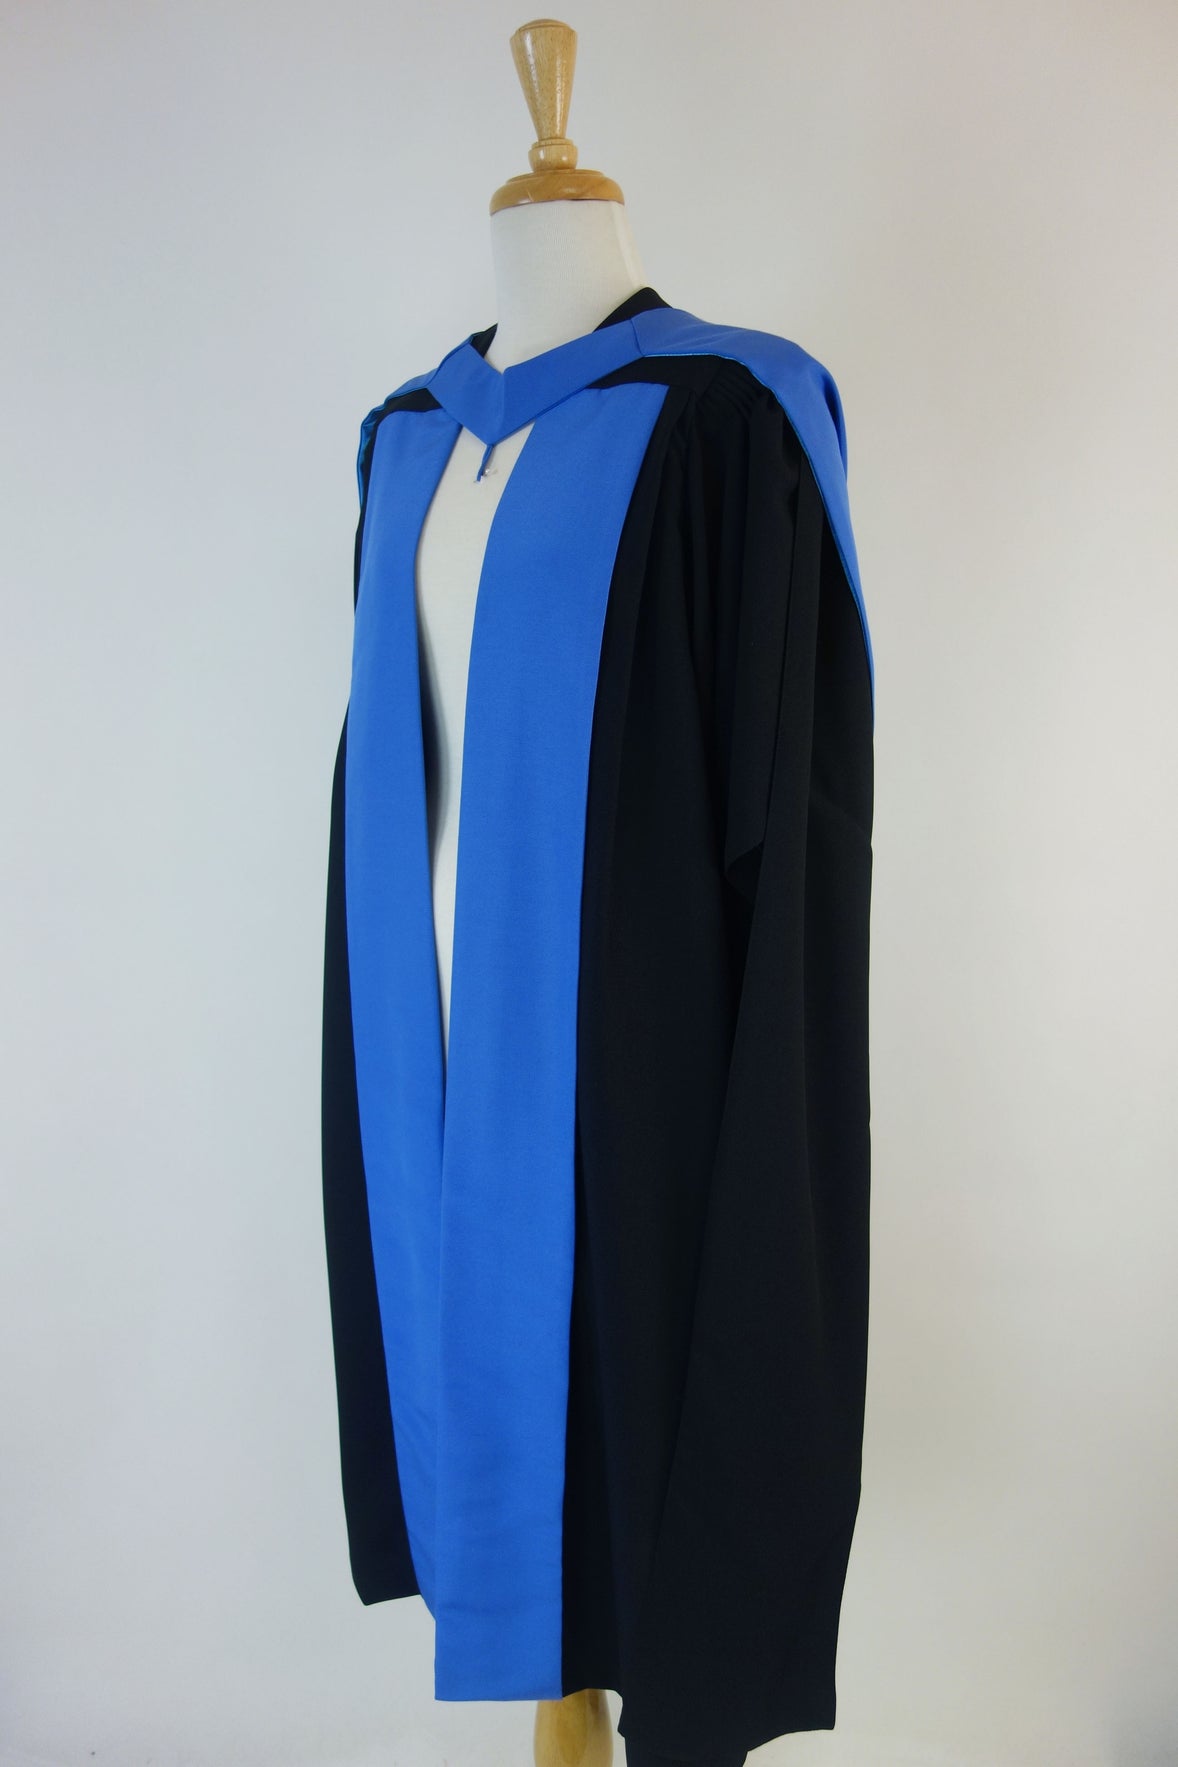 ANU PhD Graduation Gown